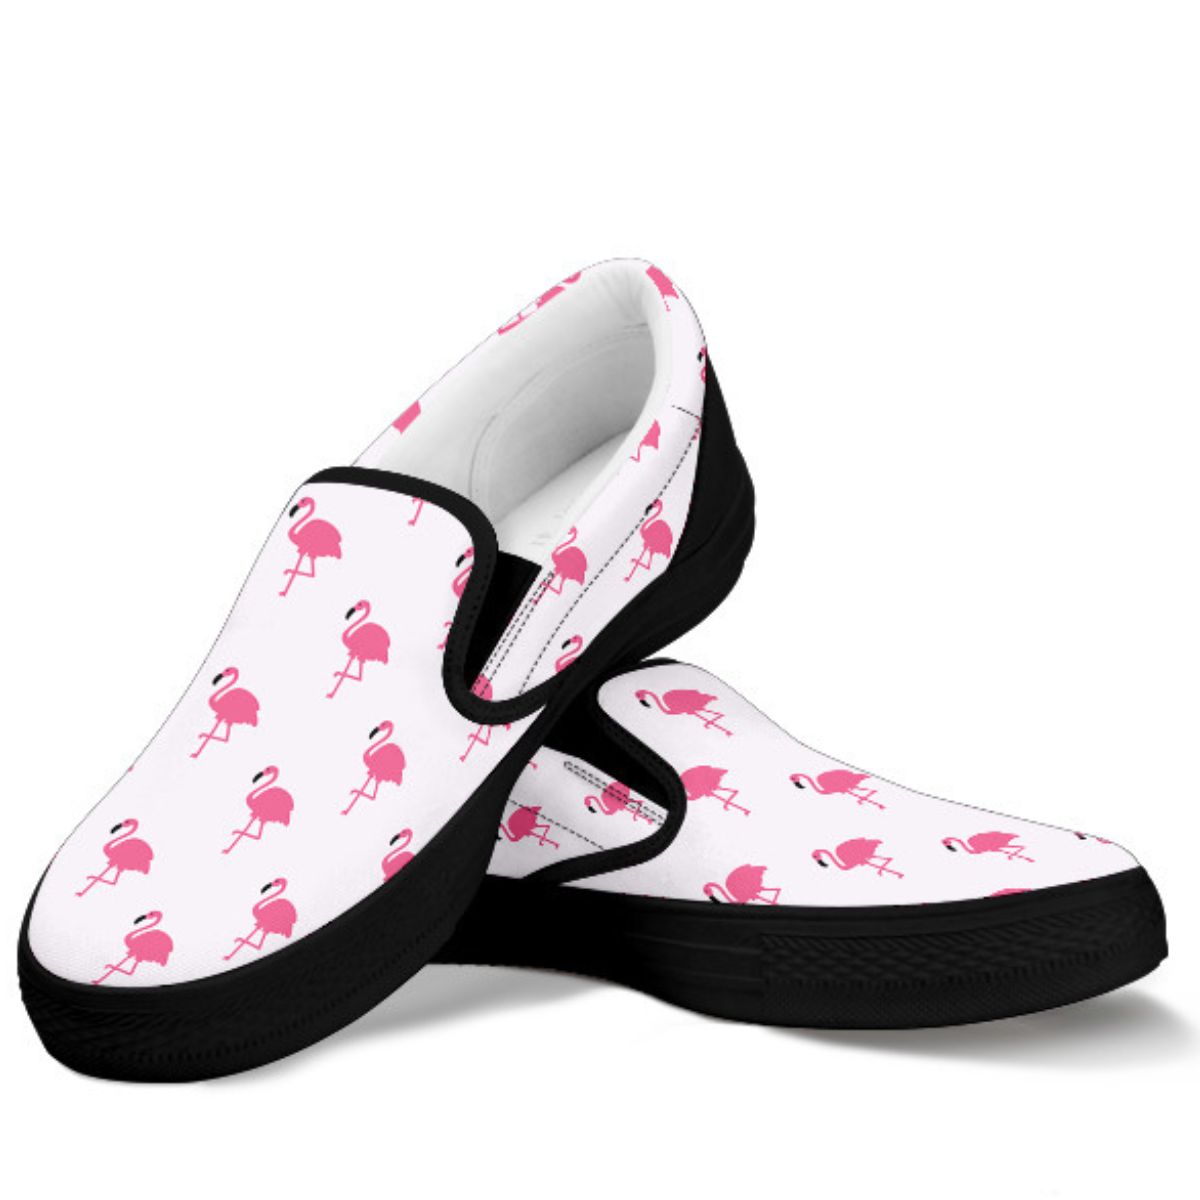 Classic Pink Flamingo Slip Ons